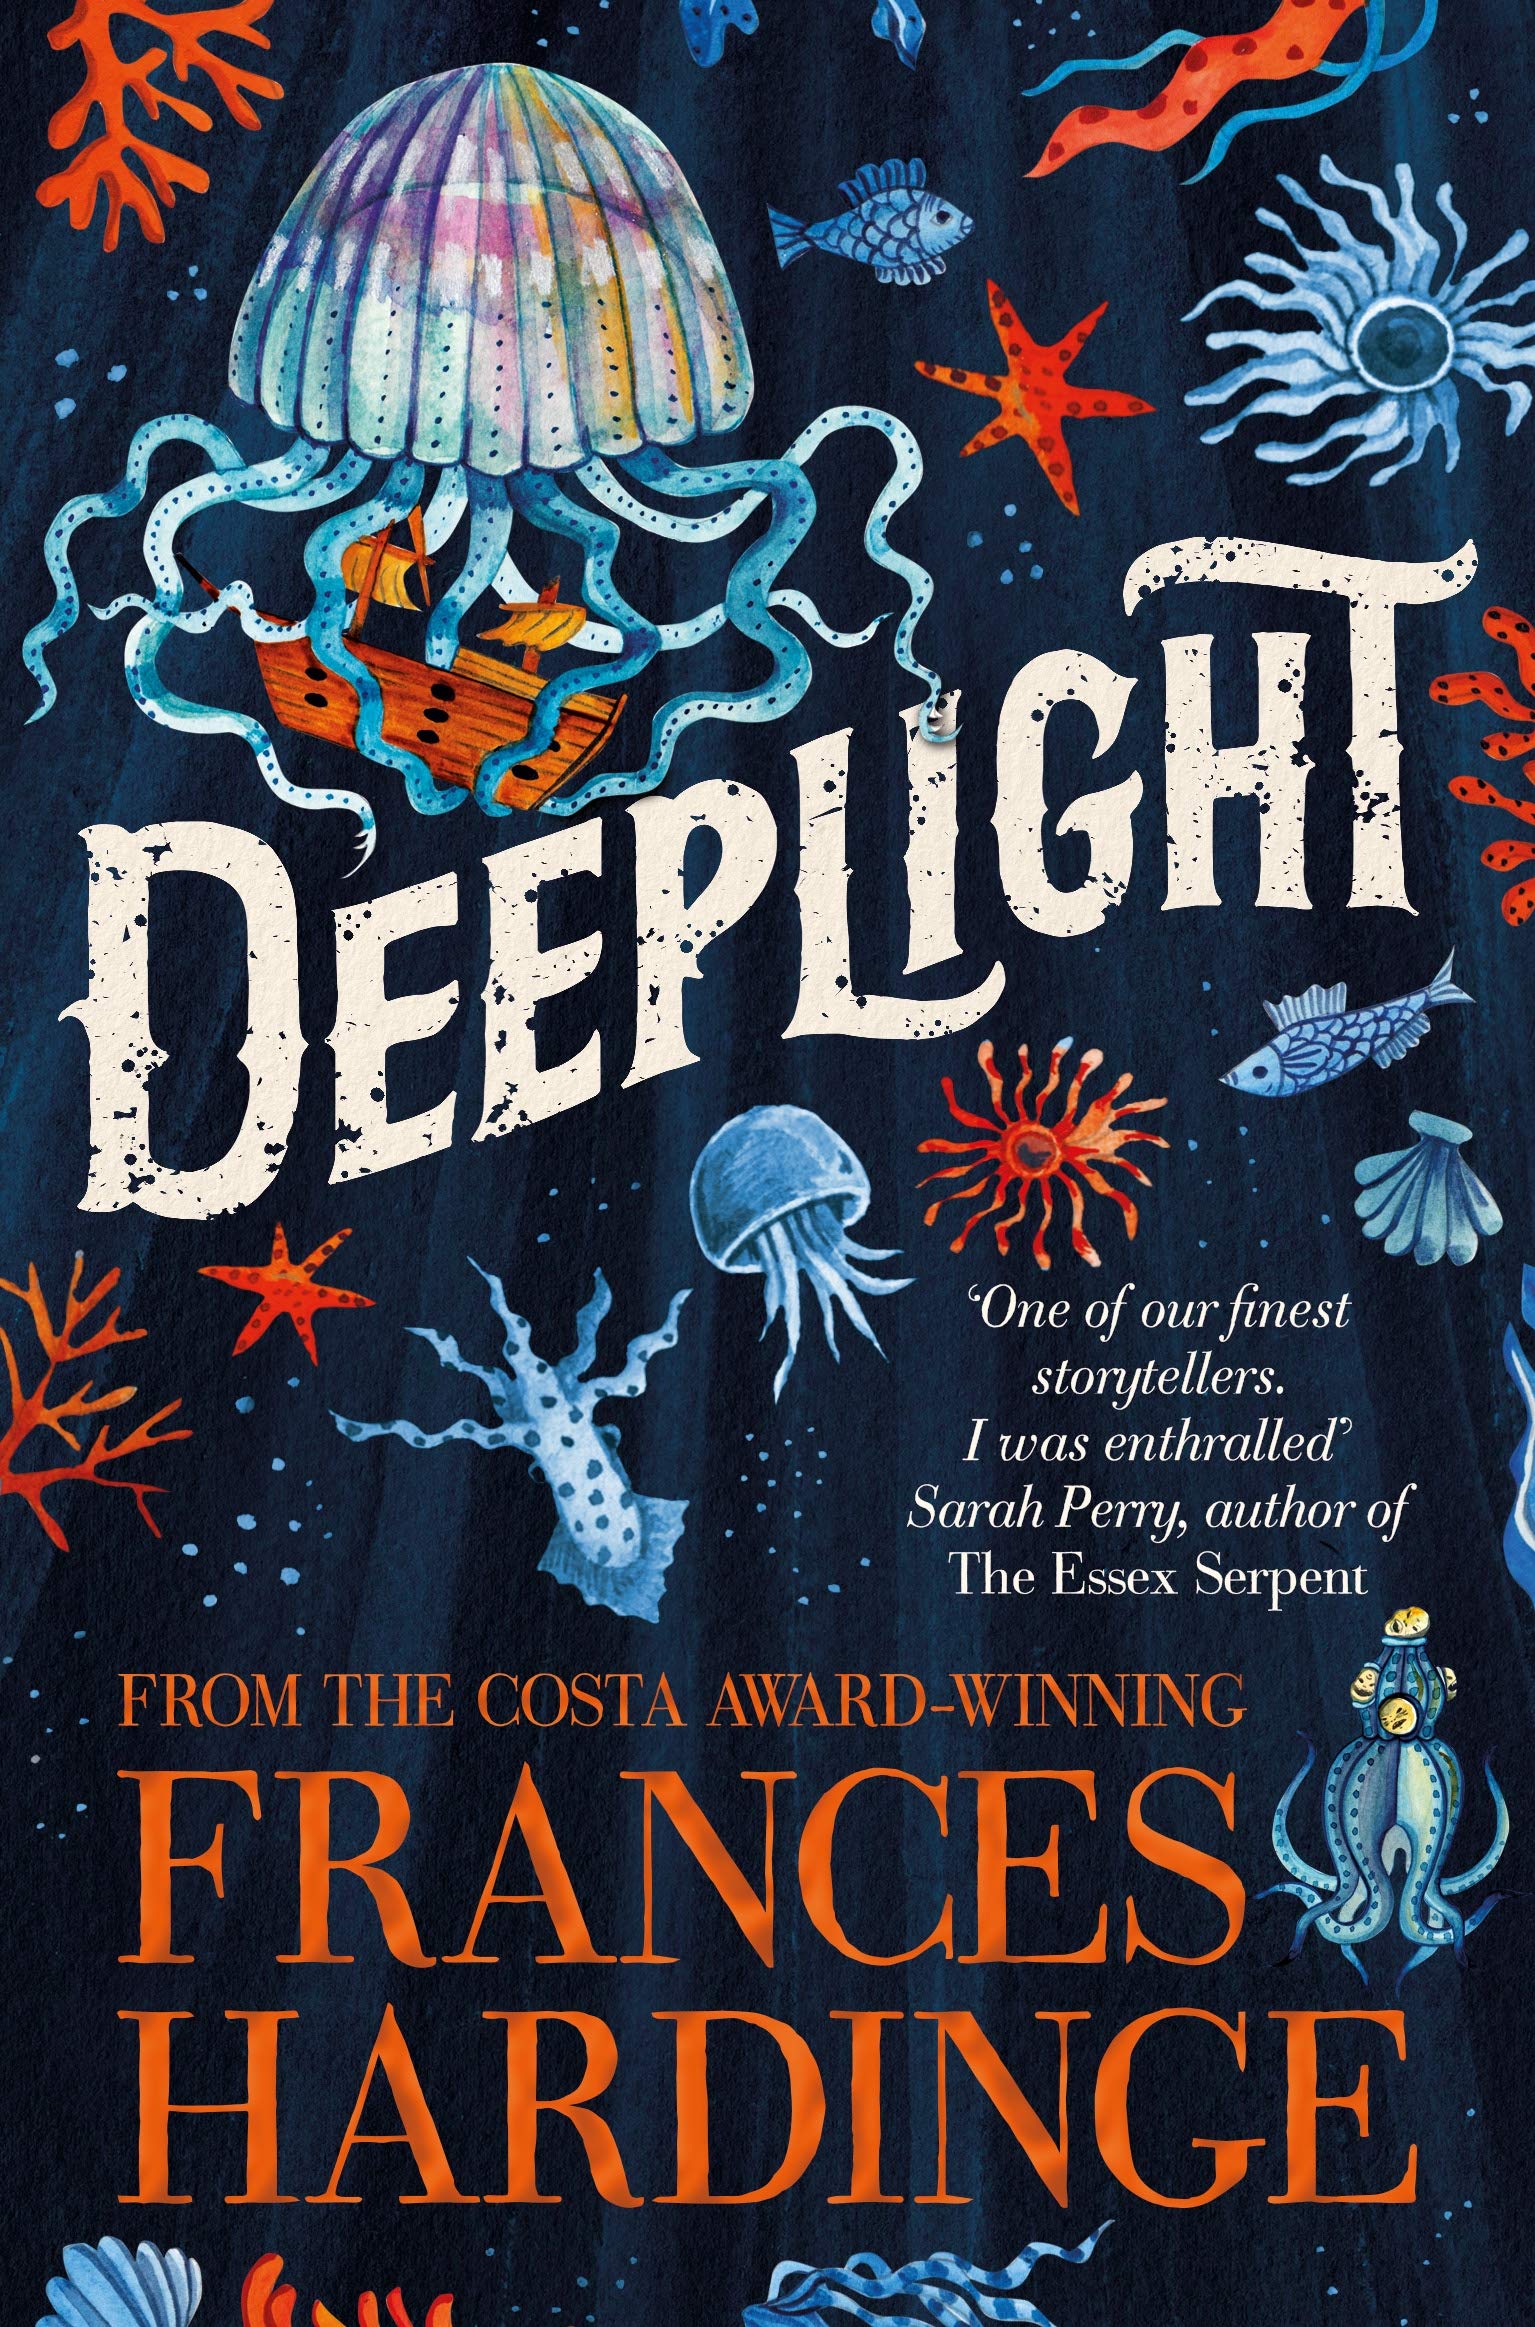 Deeplight | Frances Hardinge